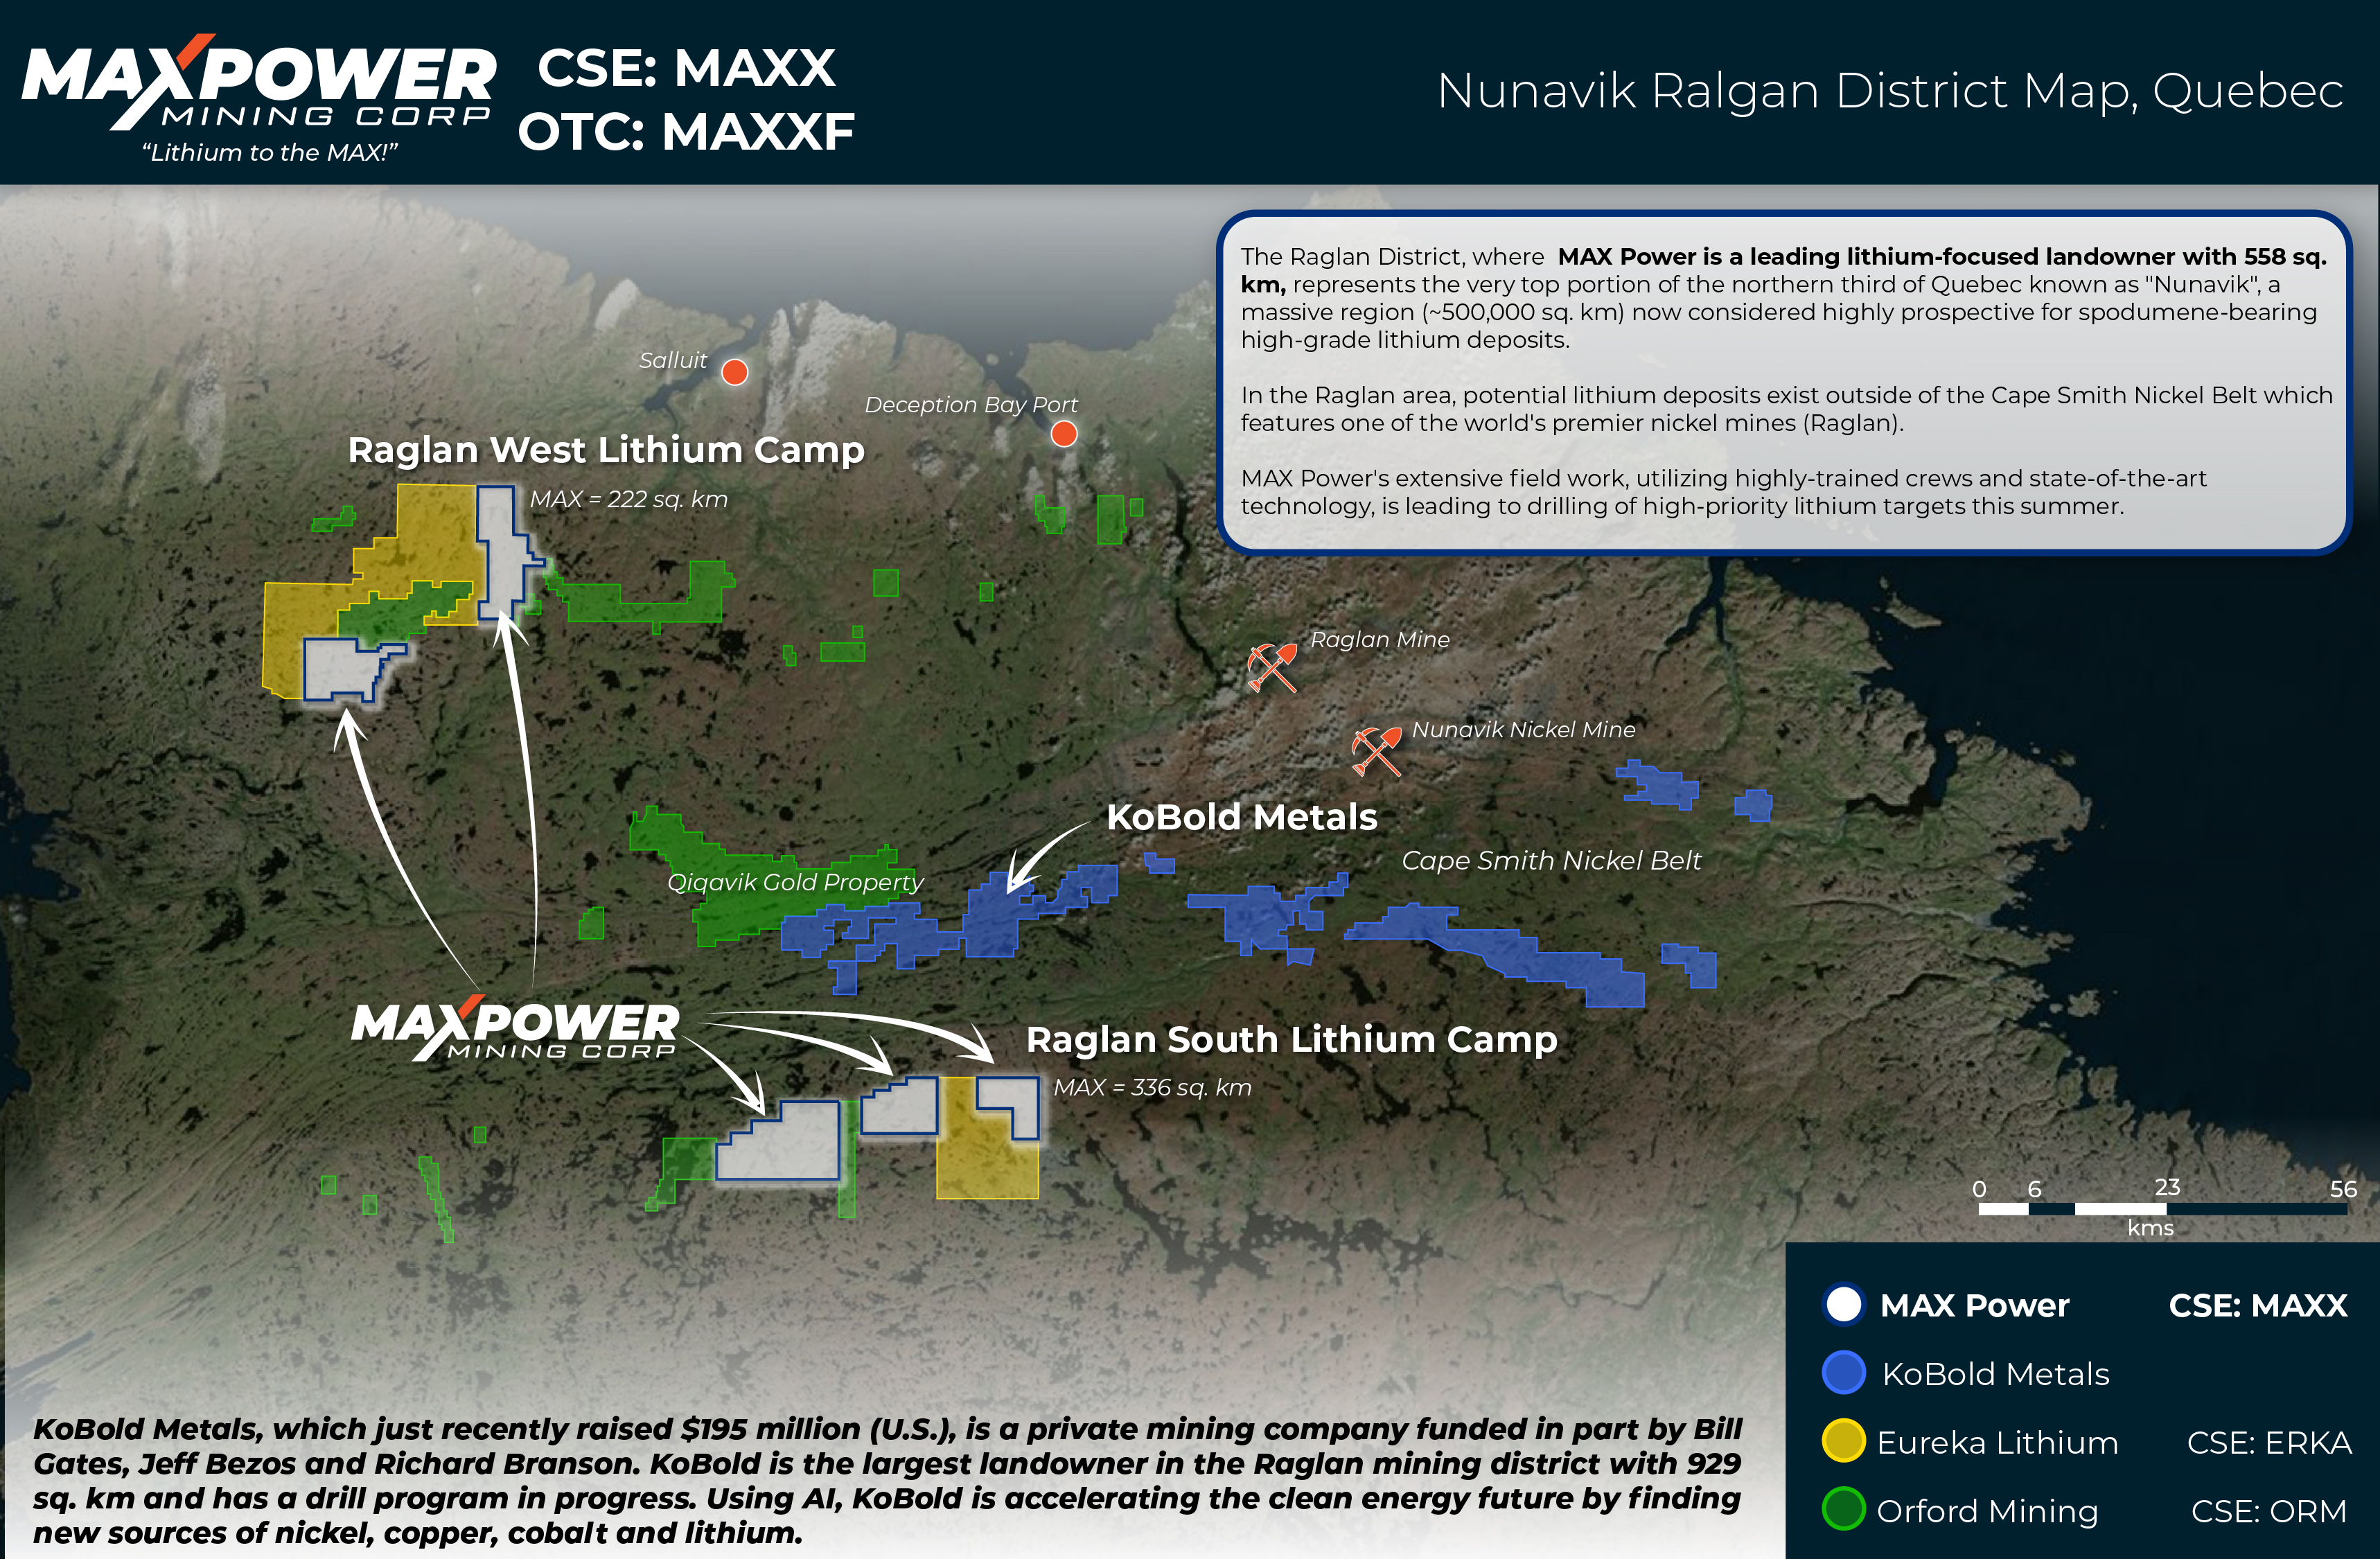 Max Power Mining Corp - Nunavik Raglan District Map, Quebec